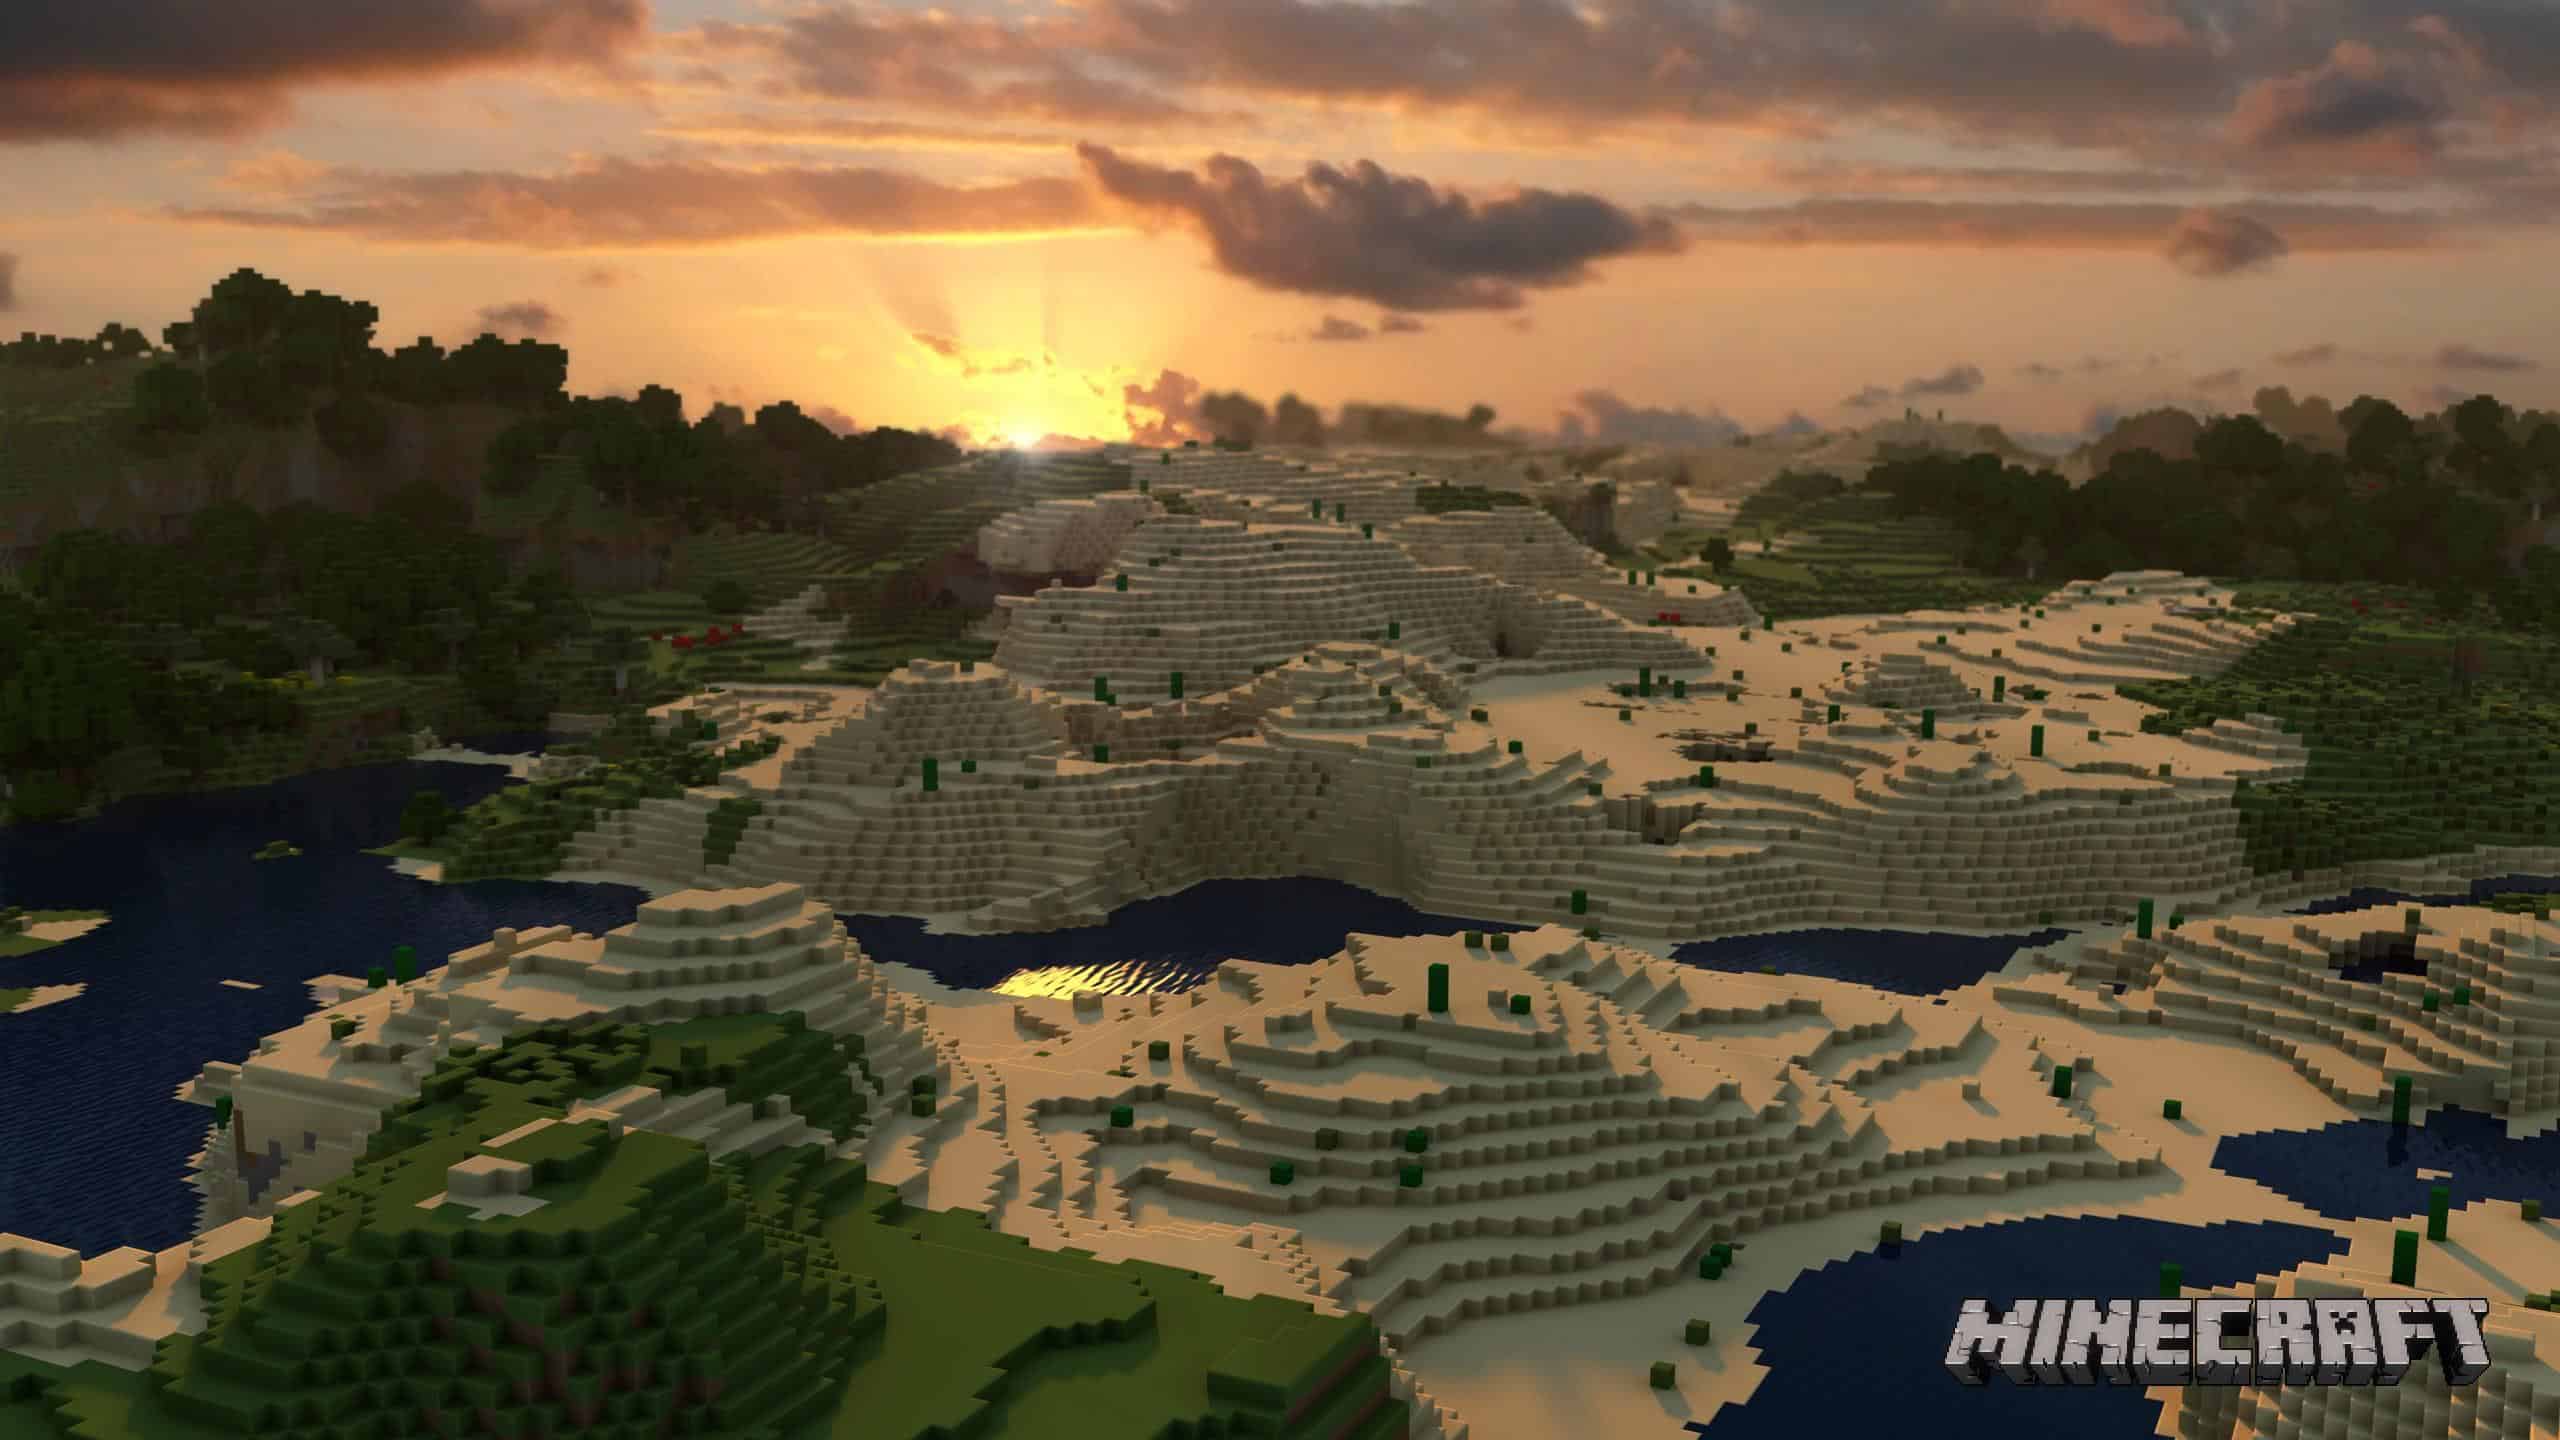 Minecraft Landscape WQHD 1440p Wallpaper